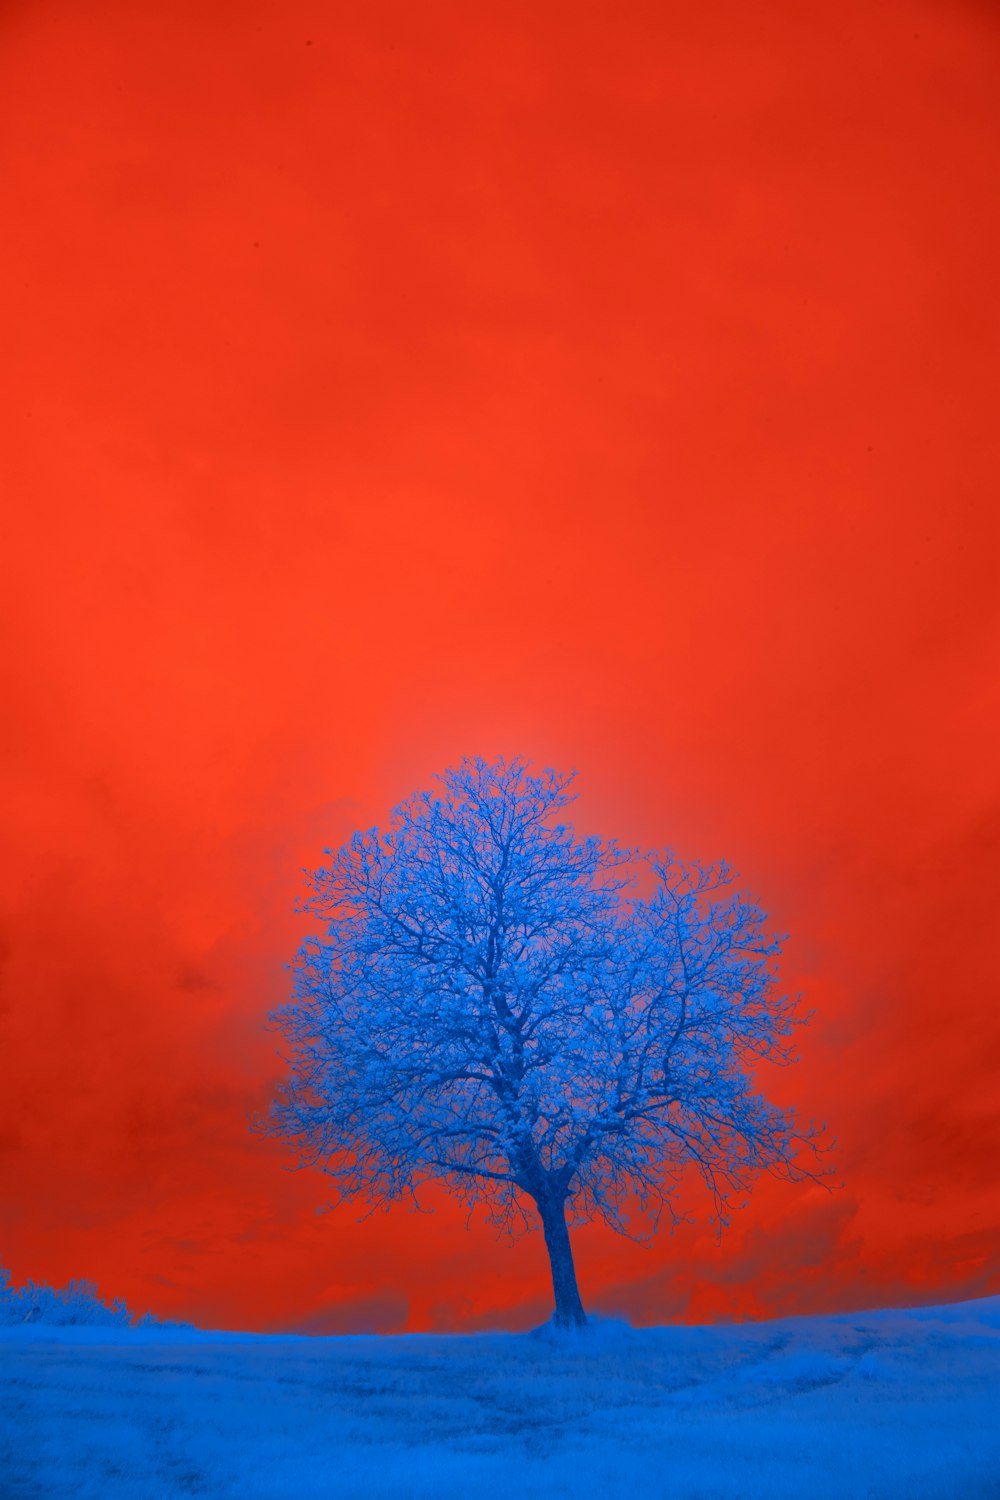 a lone tree in a snowy field under a red sky